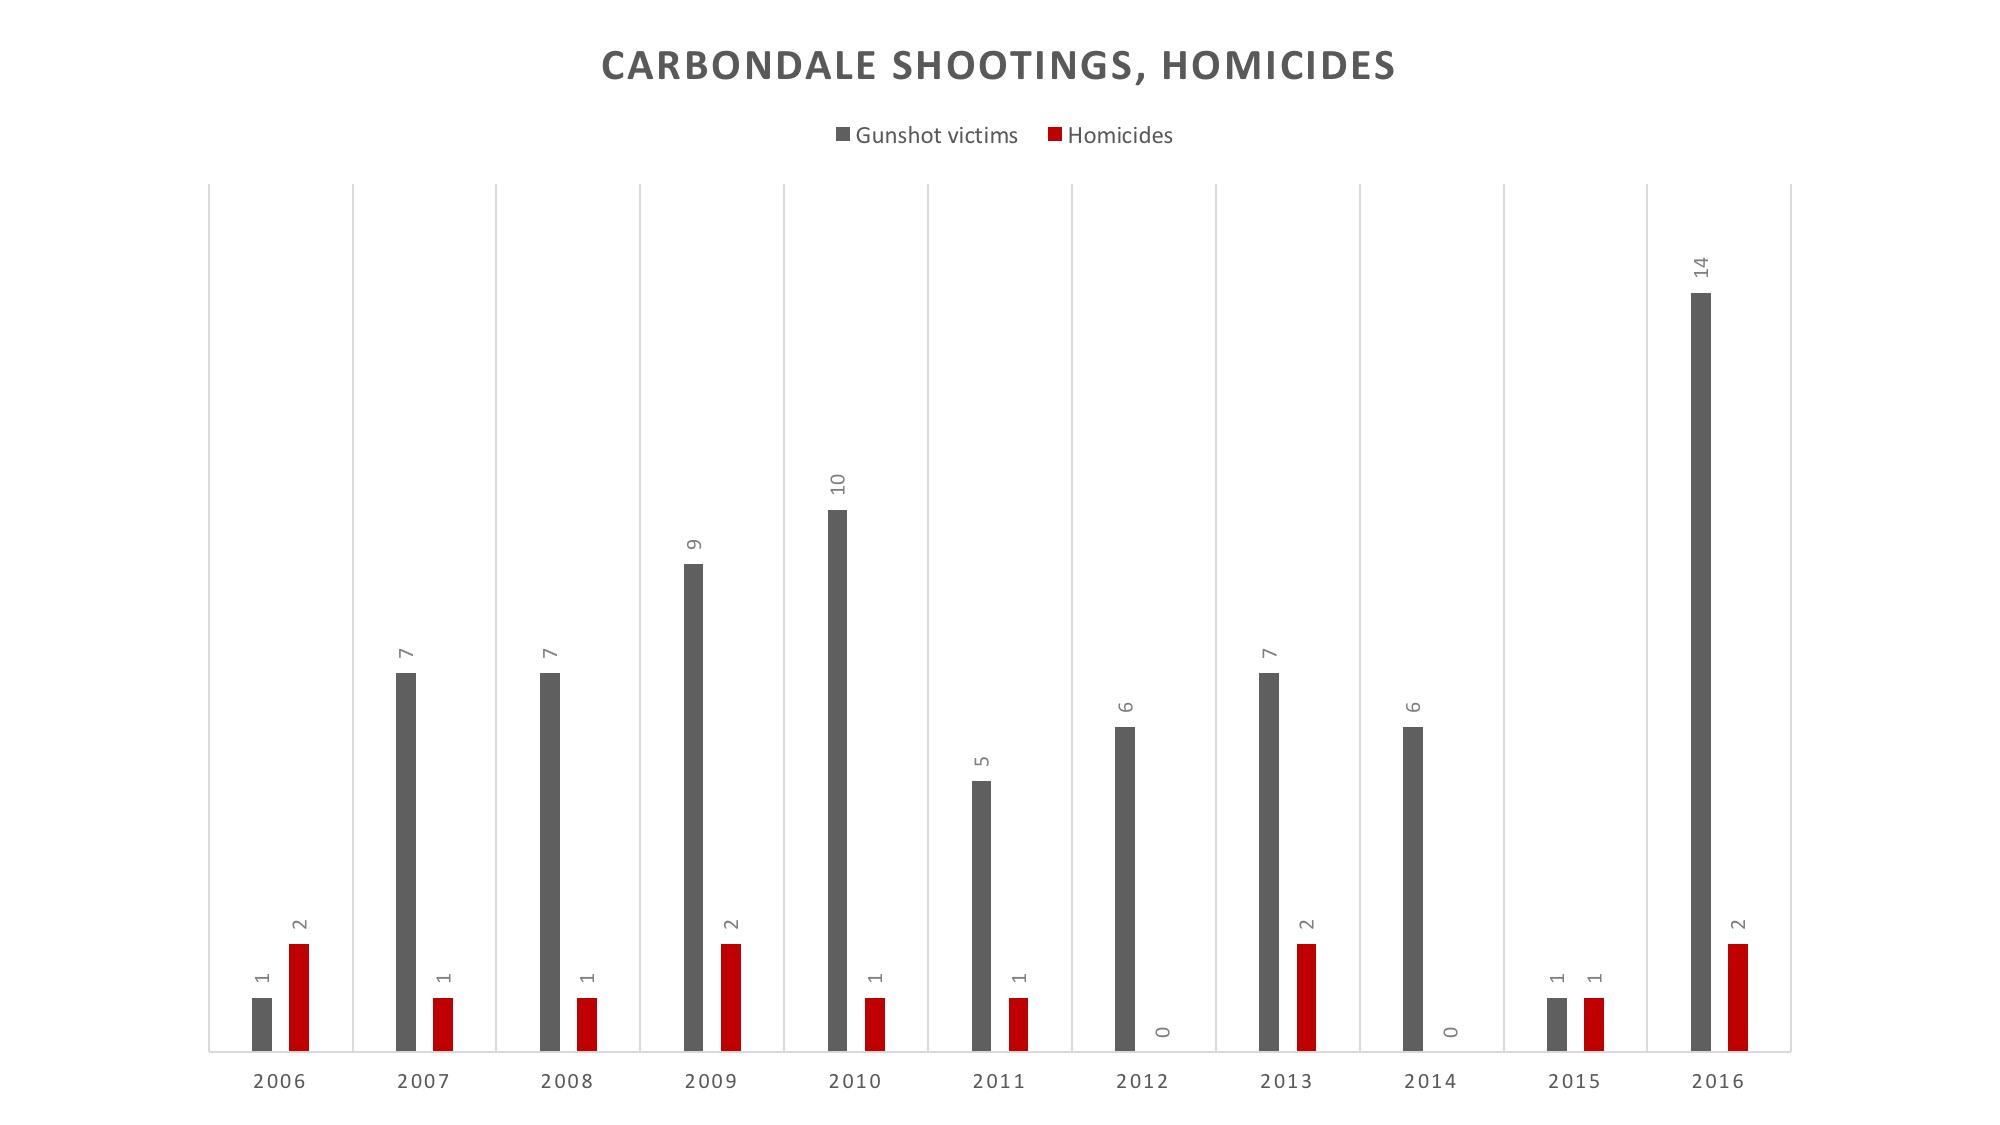 Carbondale shootings, homicides